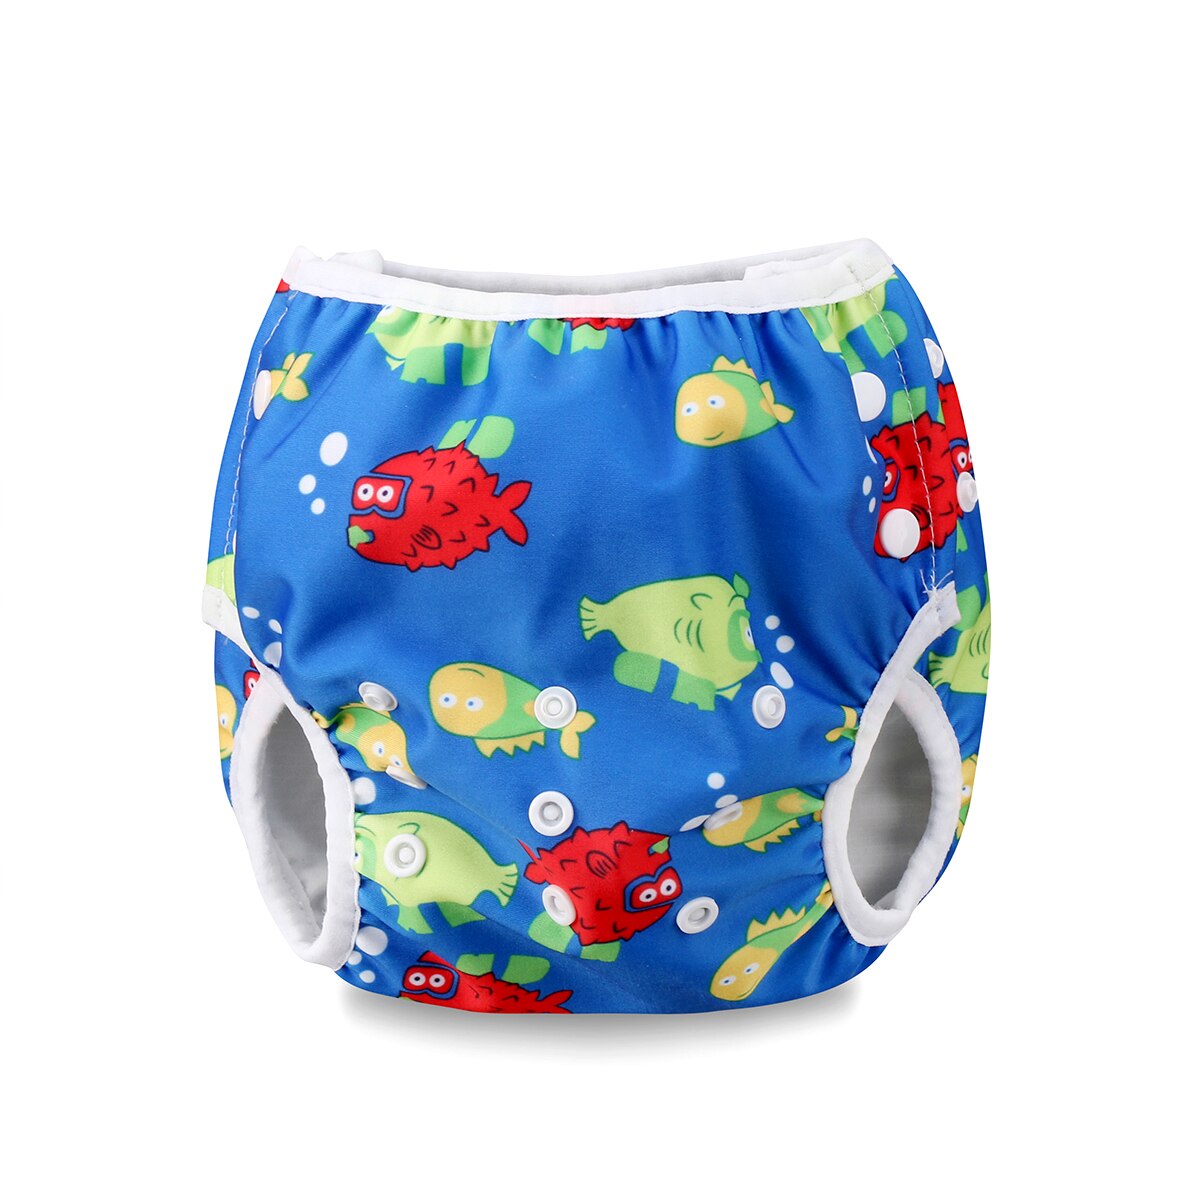 Goocheer baby svømmeble unisex svømmebukser til småbørn svømmebleer justerbar sommer badetøj til børn poolbukser: 9